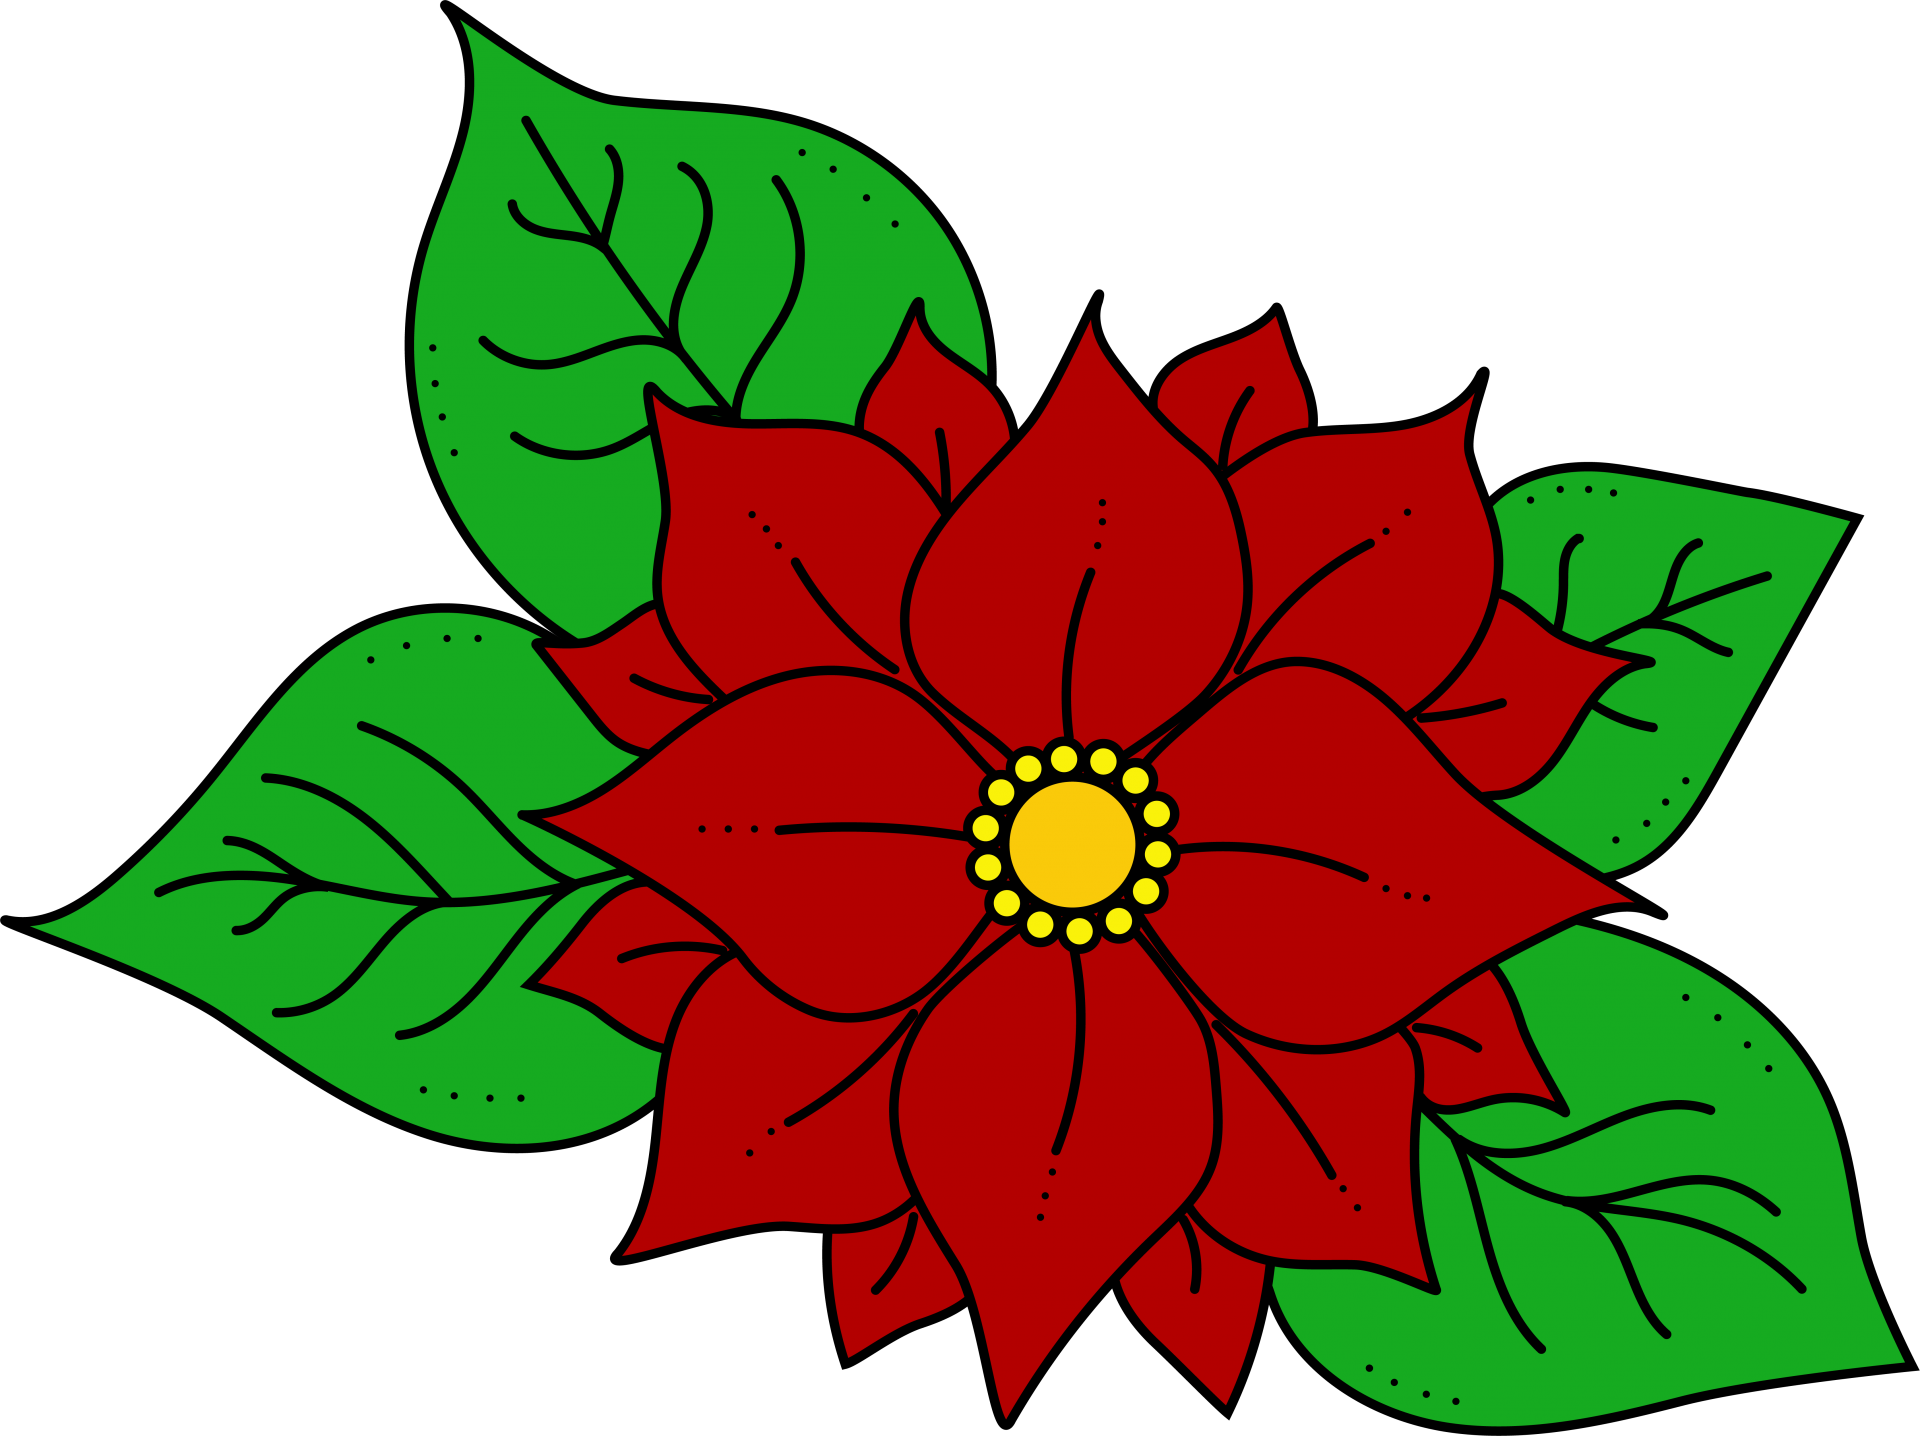 Poinsettia Flower Illustration